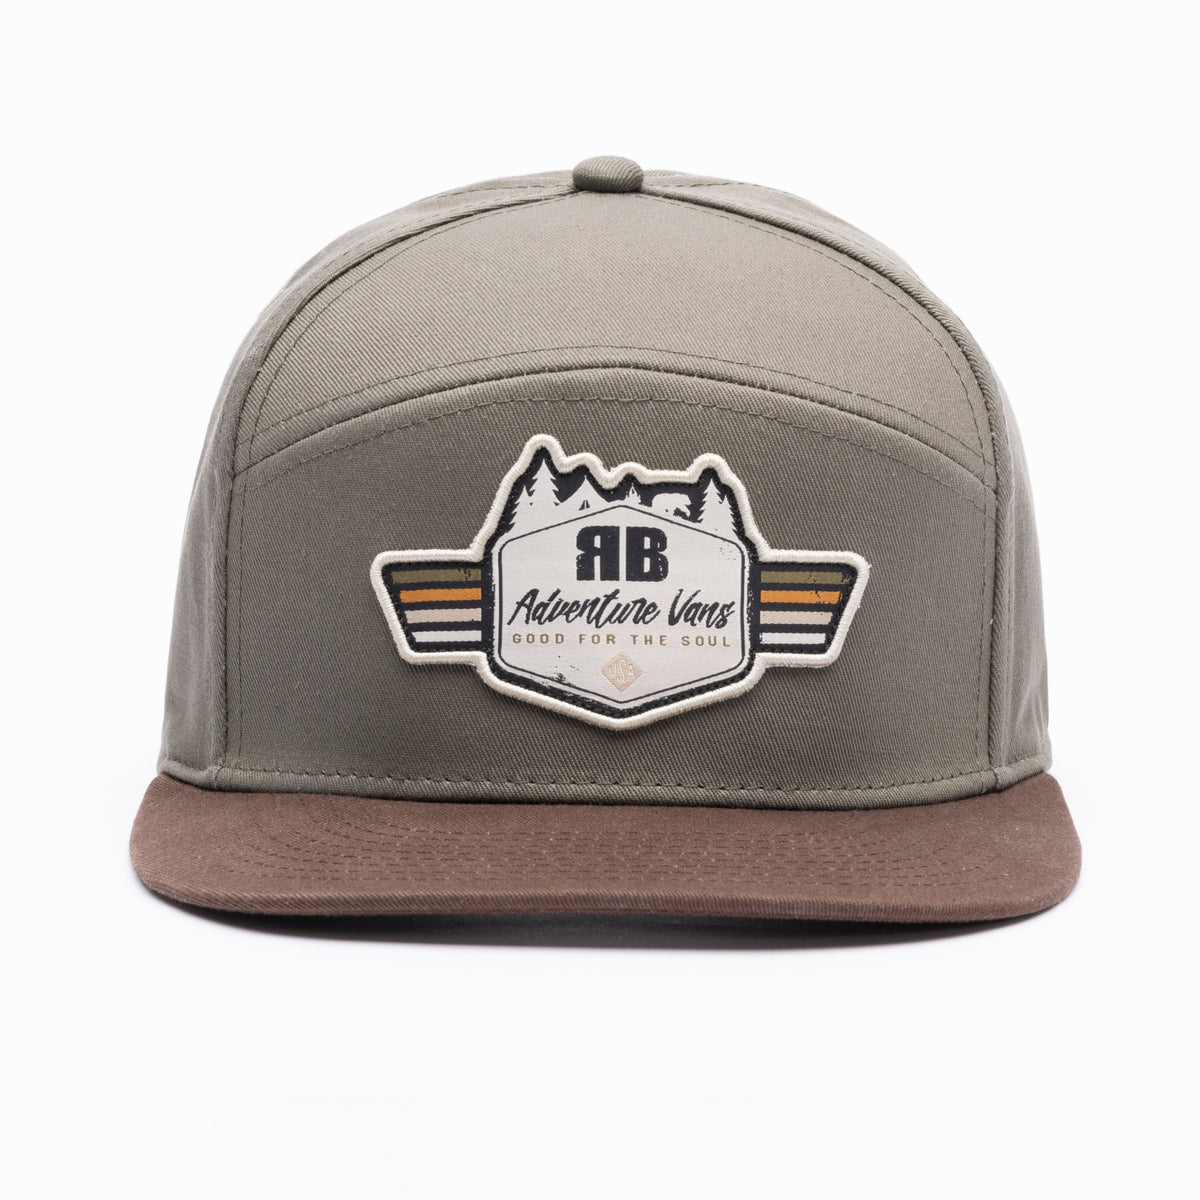 RB Hat - Adventure Van - Olive/Brown - Solid Back